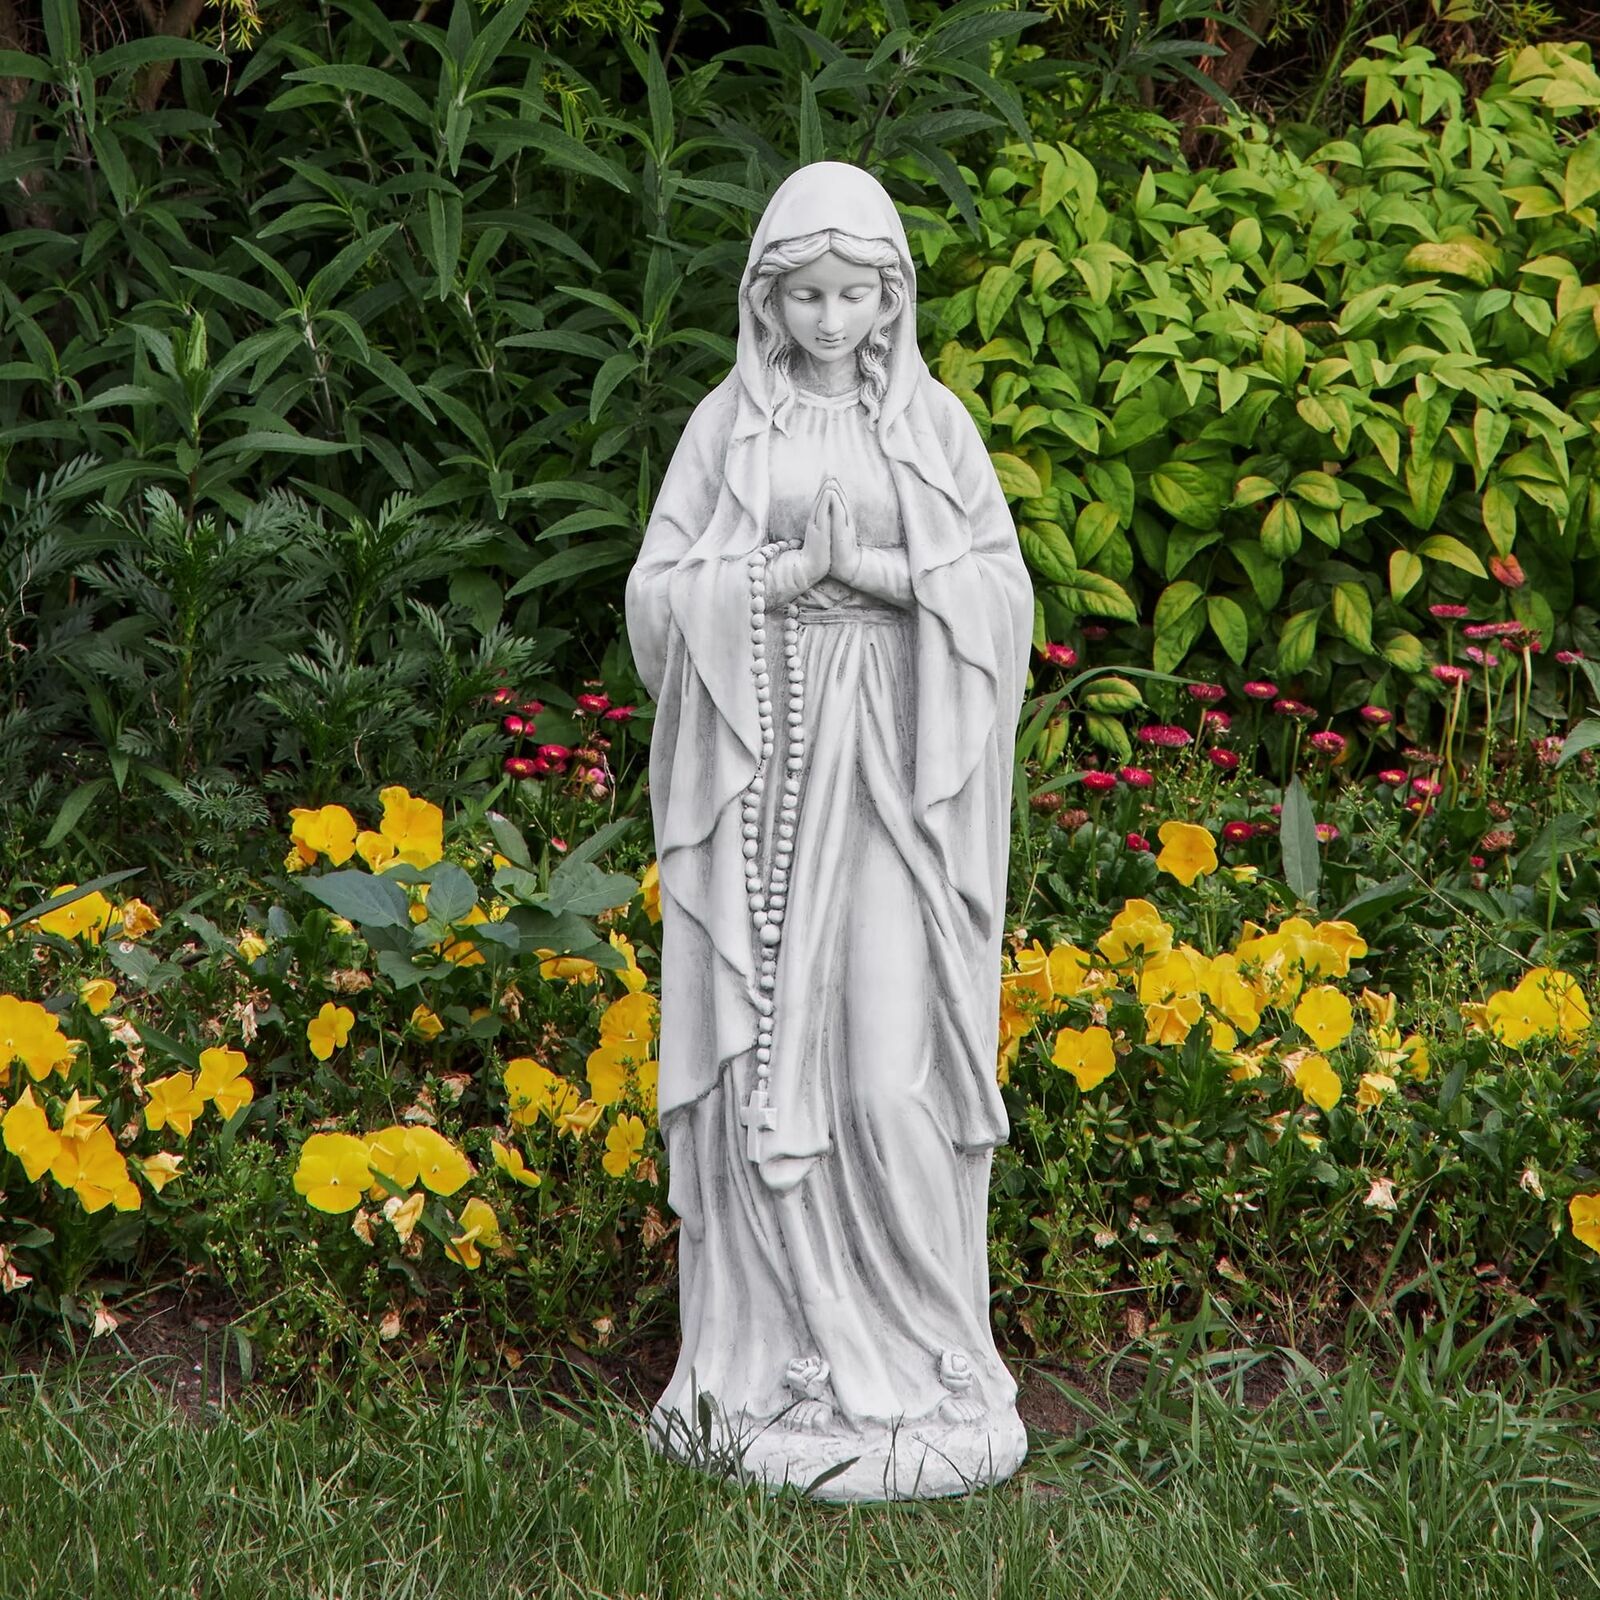 TOETOL Virgin Mary Praying Statue 29.9 Inch Tall Outdoor Garden Religious Dec...